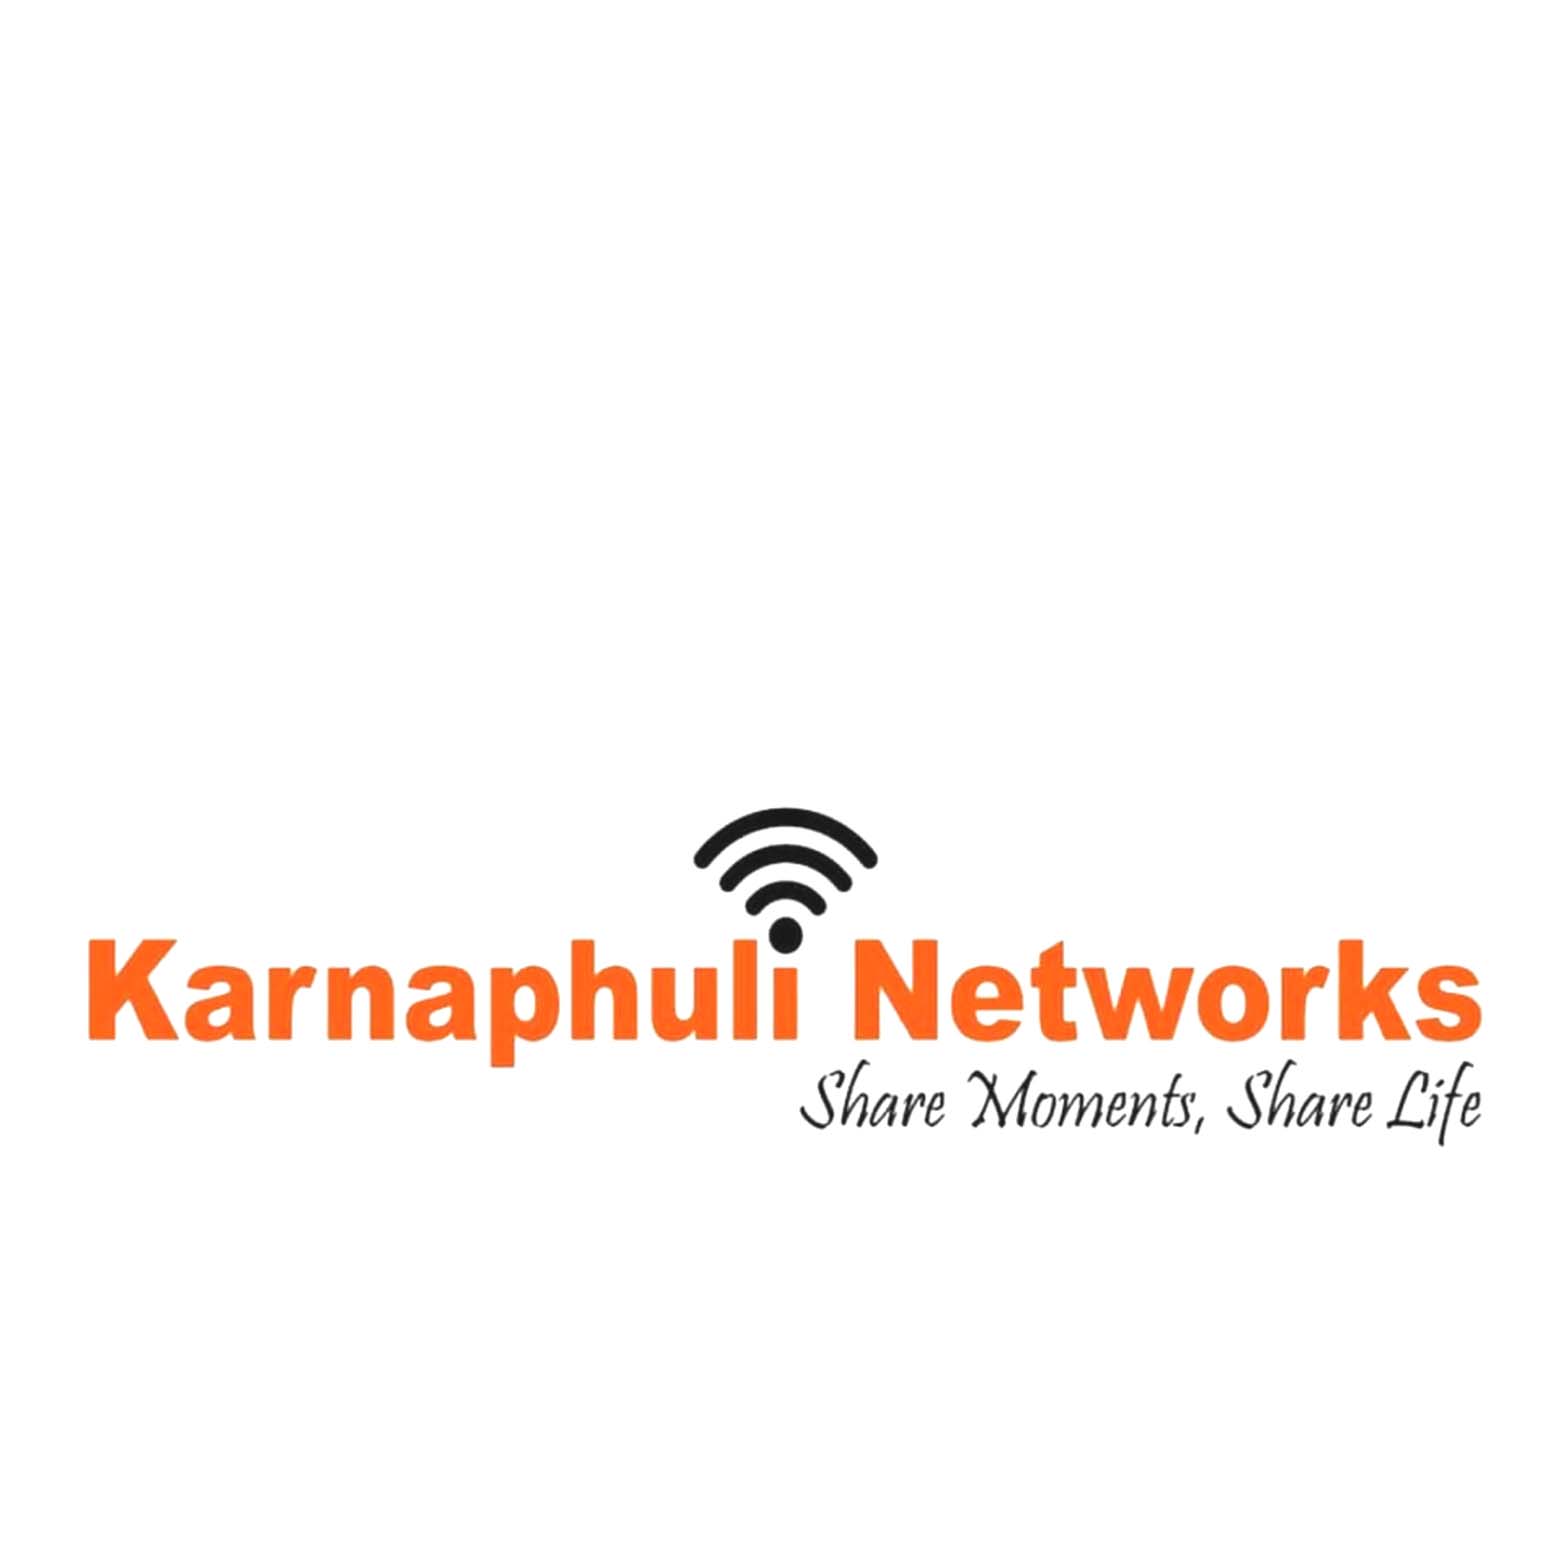 Karnaphuli Networks